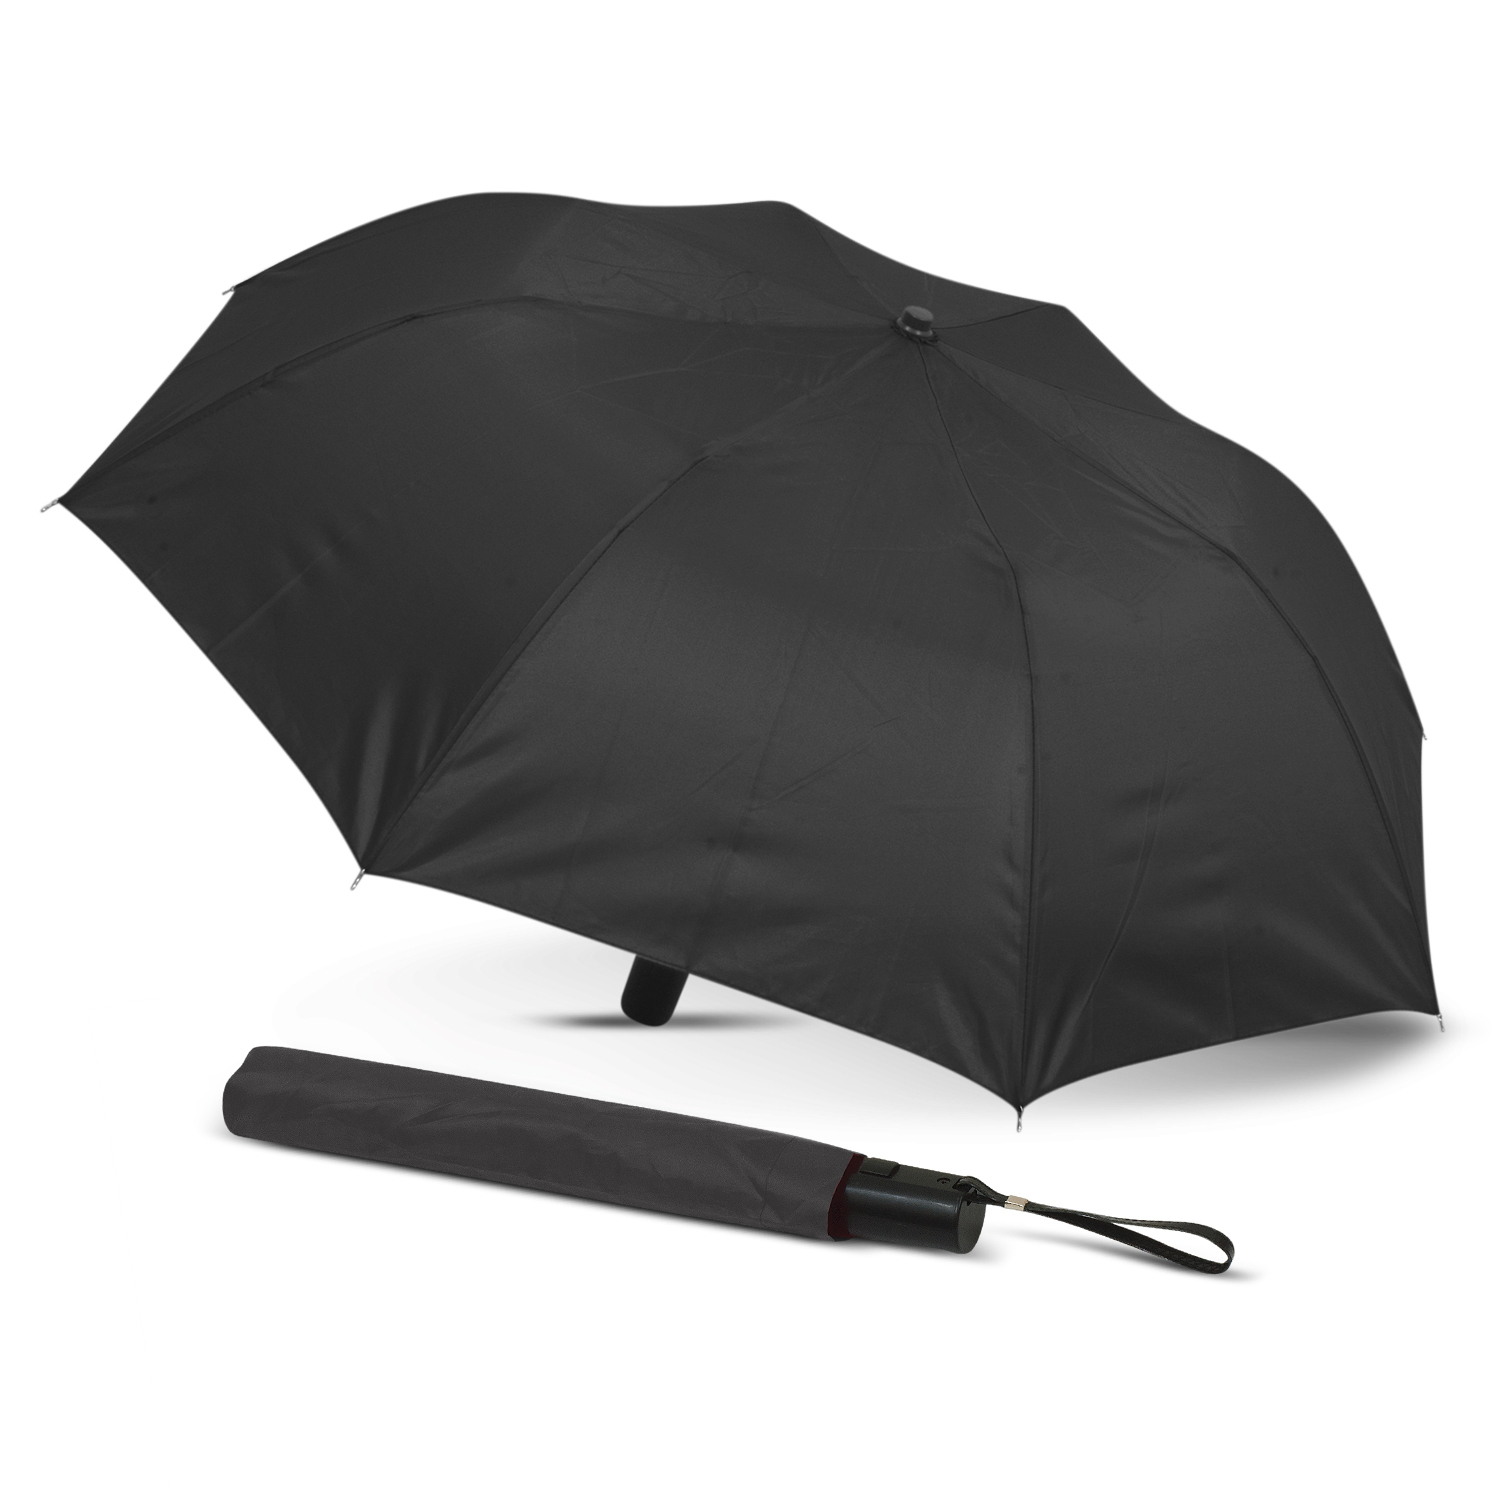 Avon Compact Umbrella - 